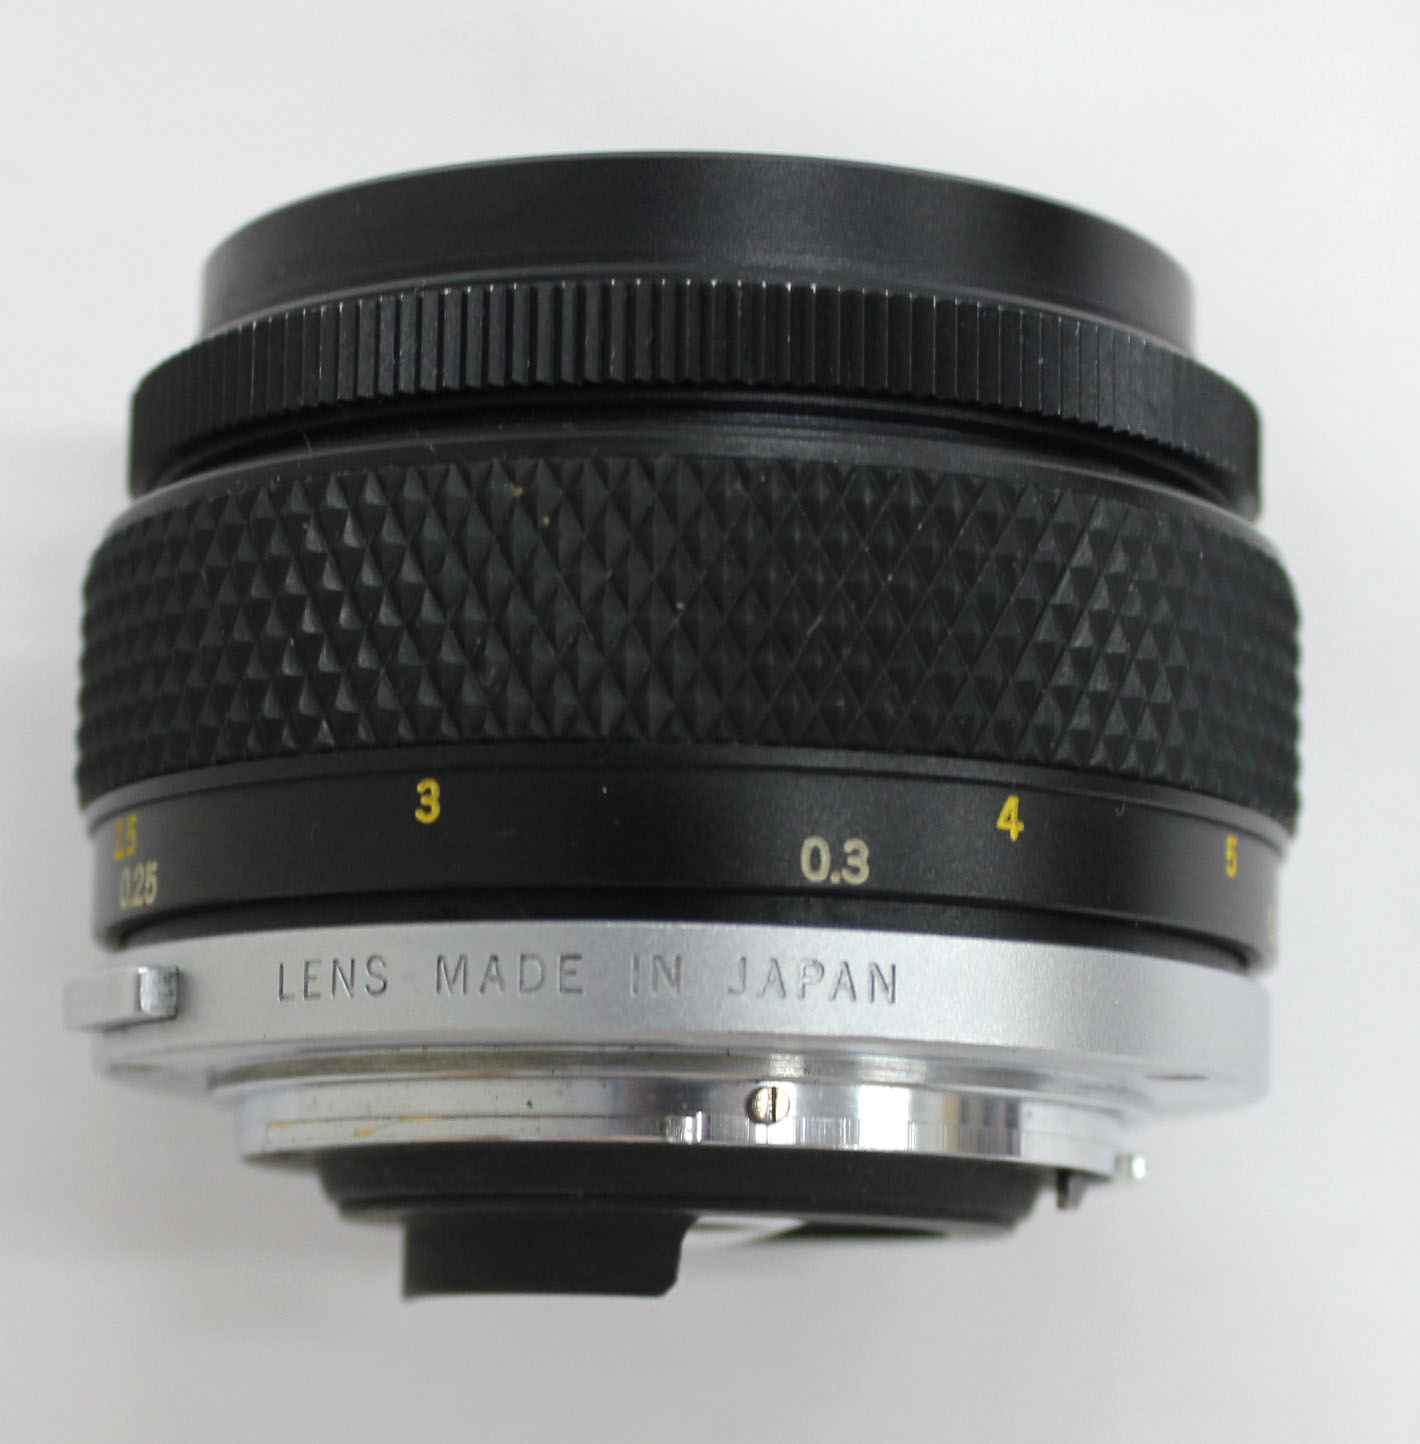 Olympus OM-2N 35mm SLR Film Camera with Macro 50mm F/3.5 Lens, Winder & Flash from Japan Photo 15